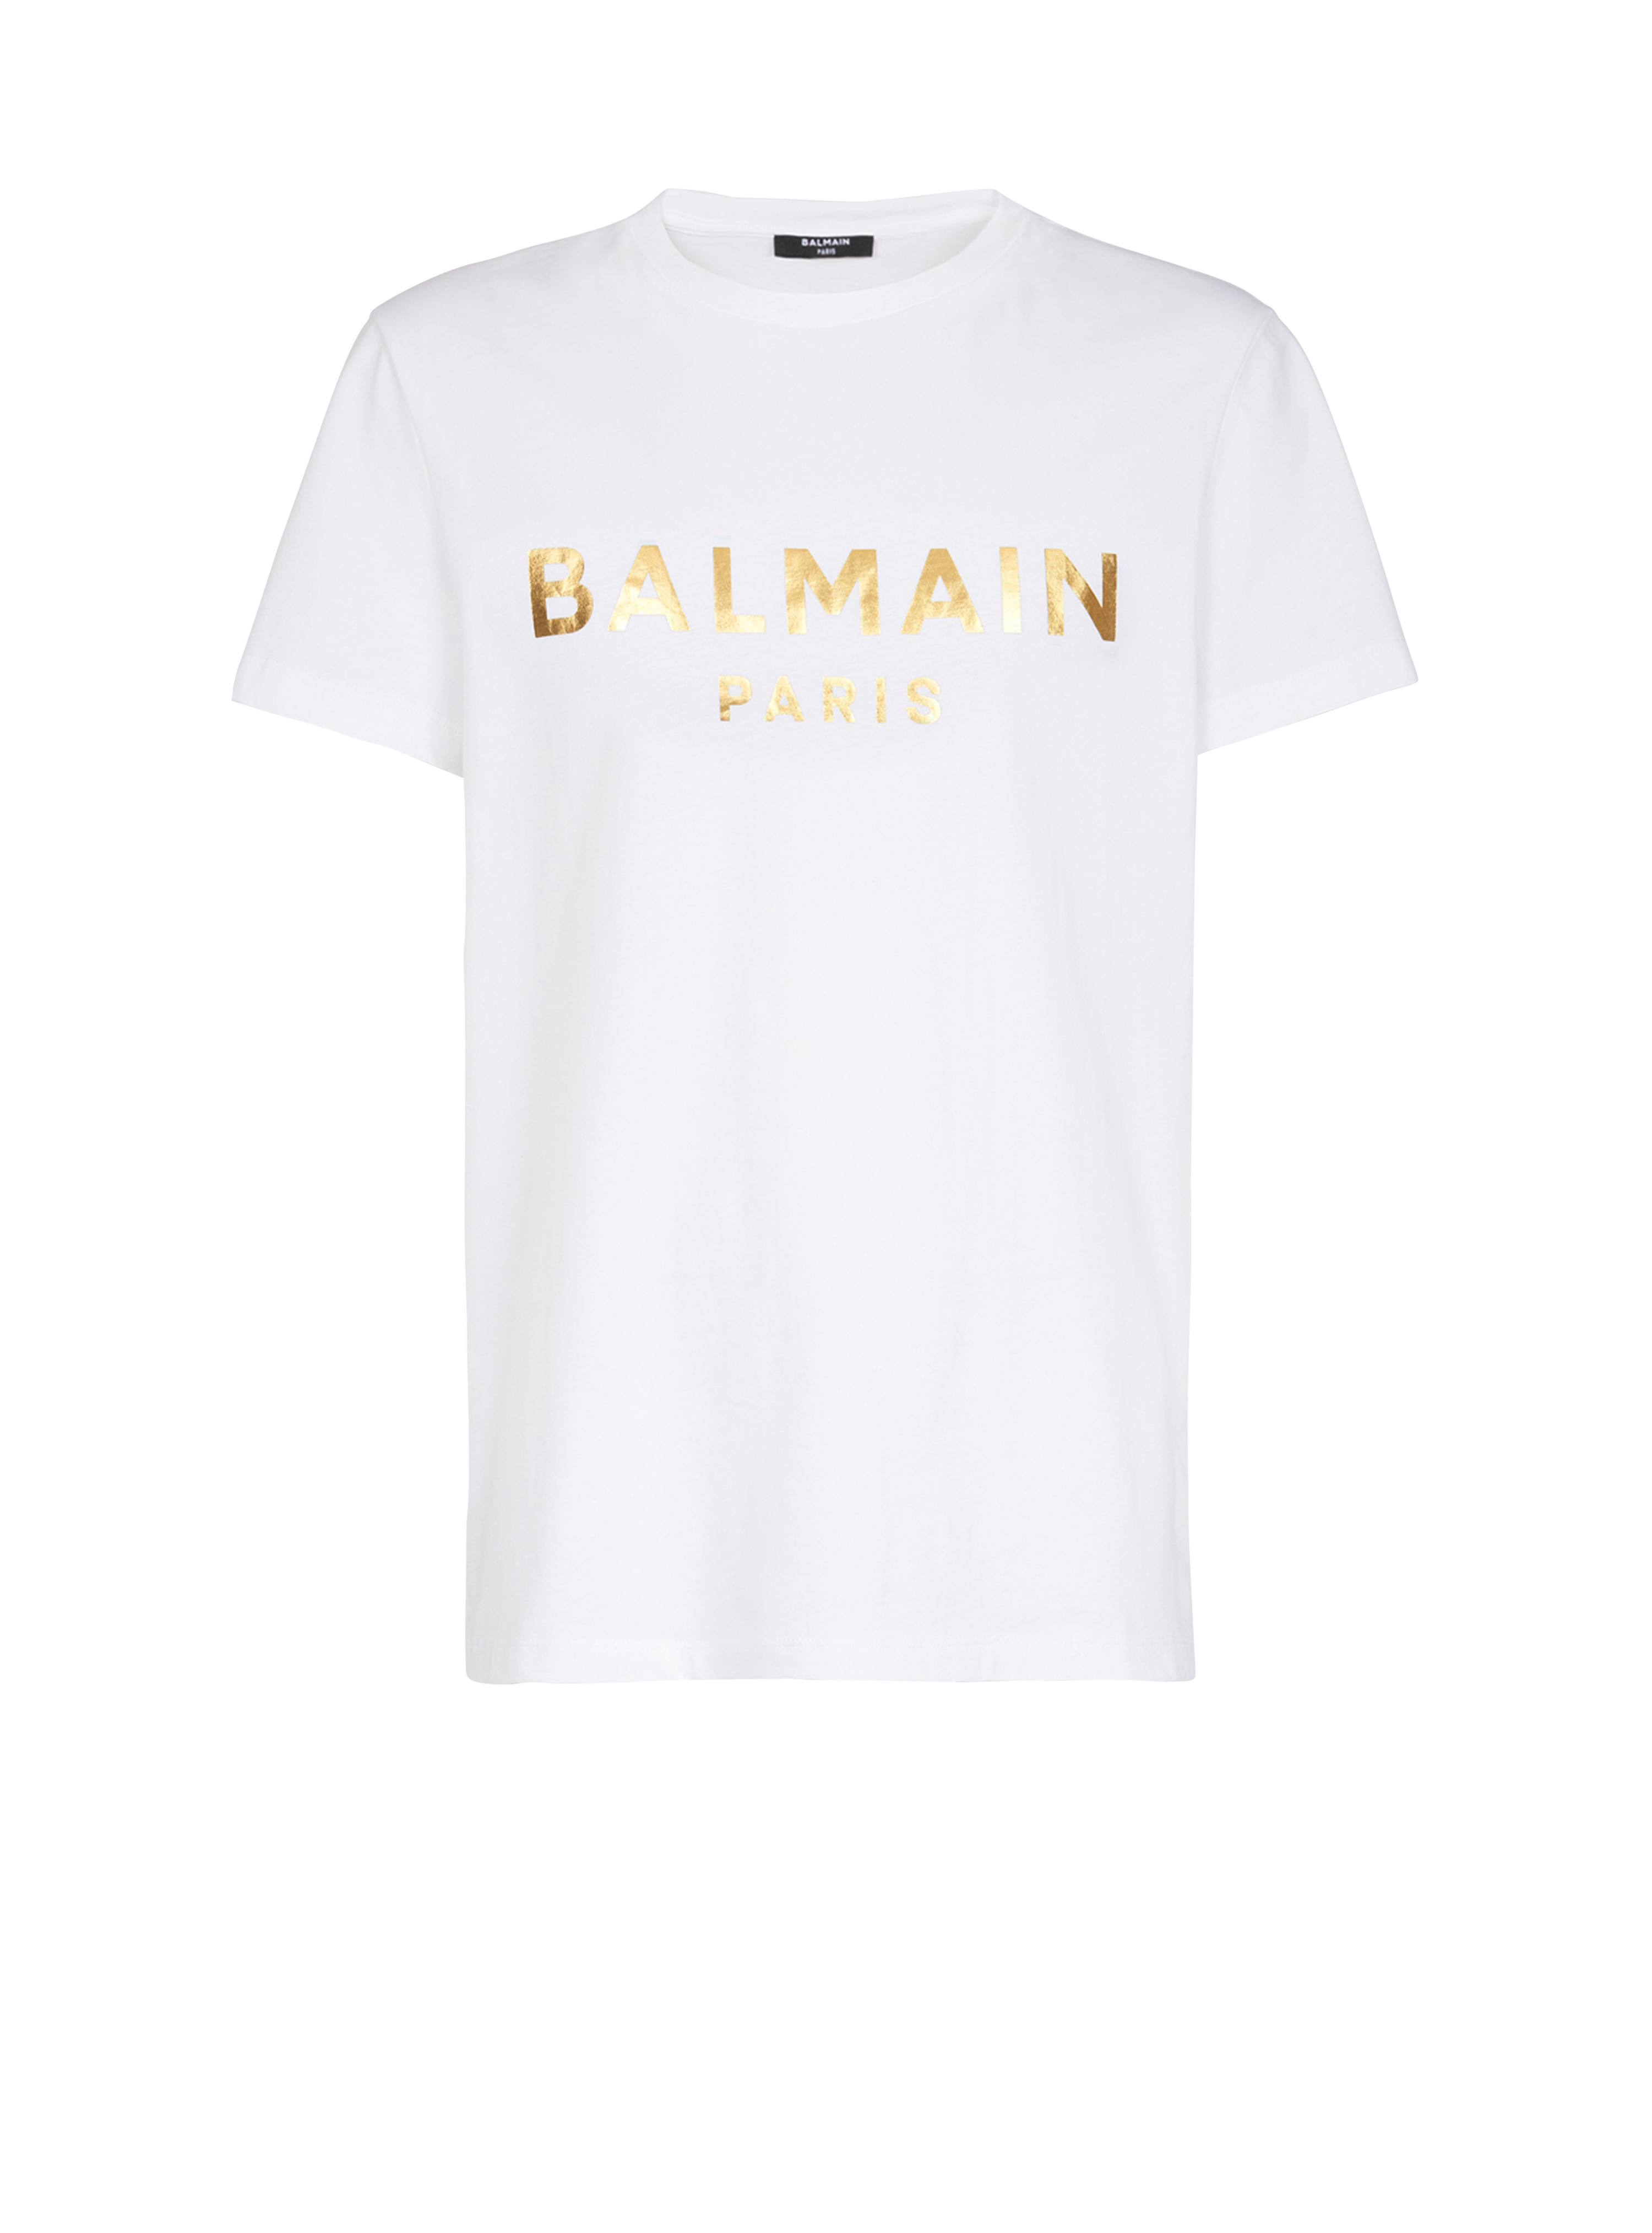 Balmain Paris 로고 프린트 디테일 코튼 티셔츠, 흰색